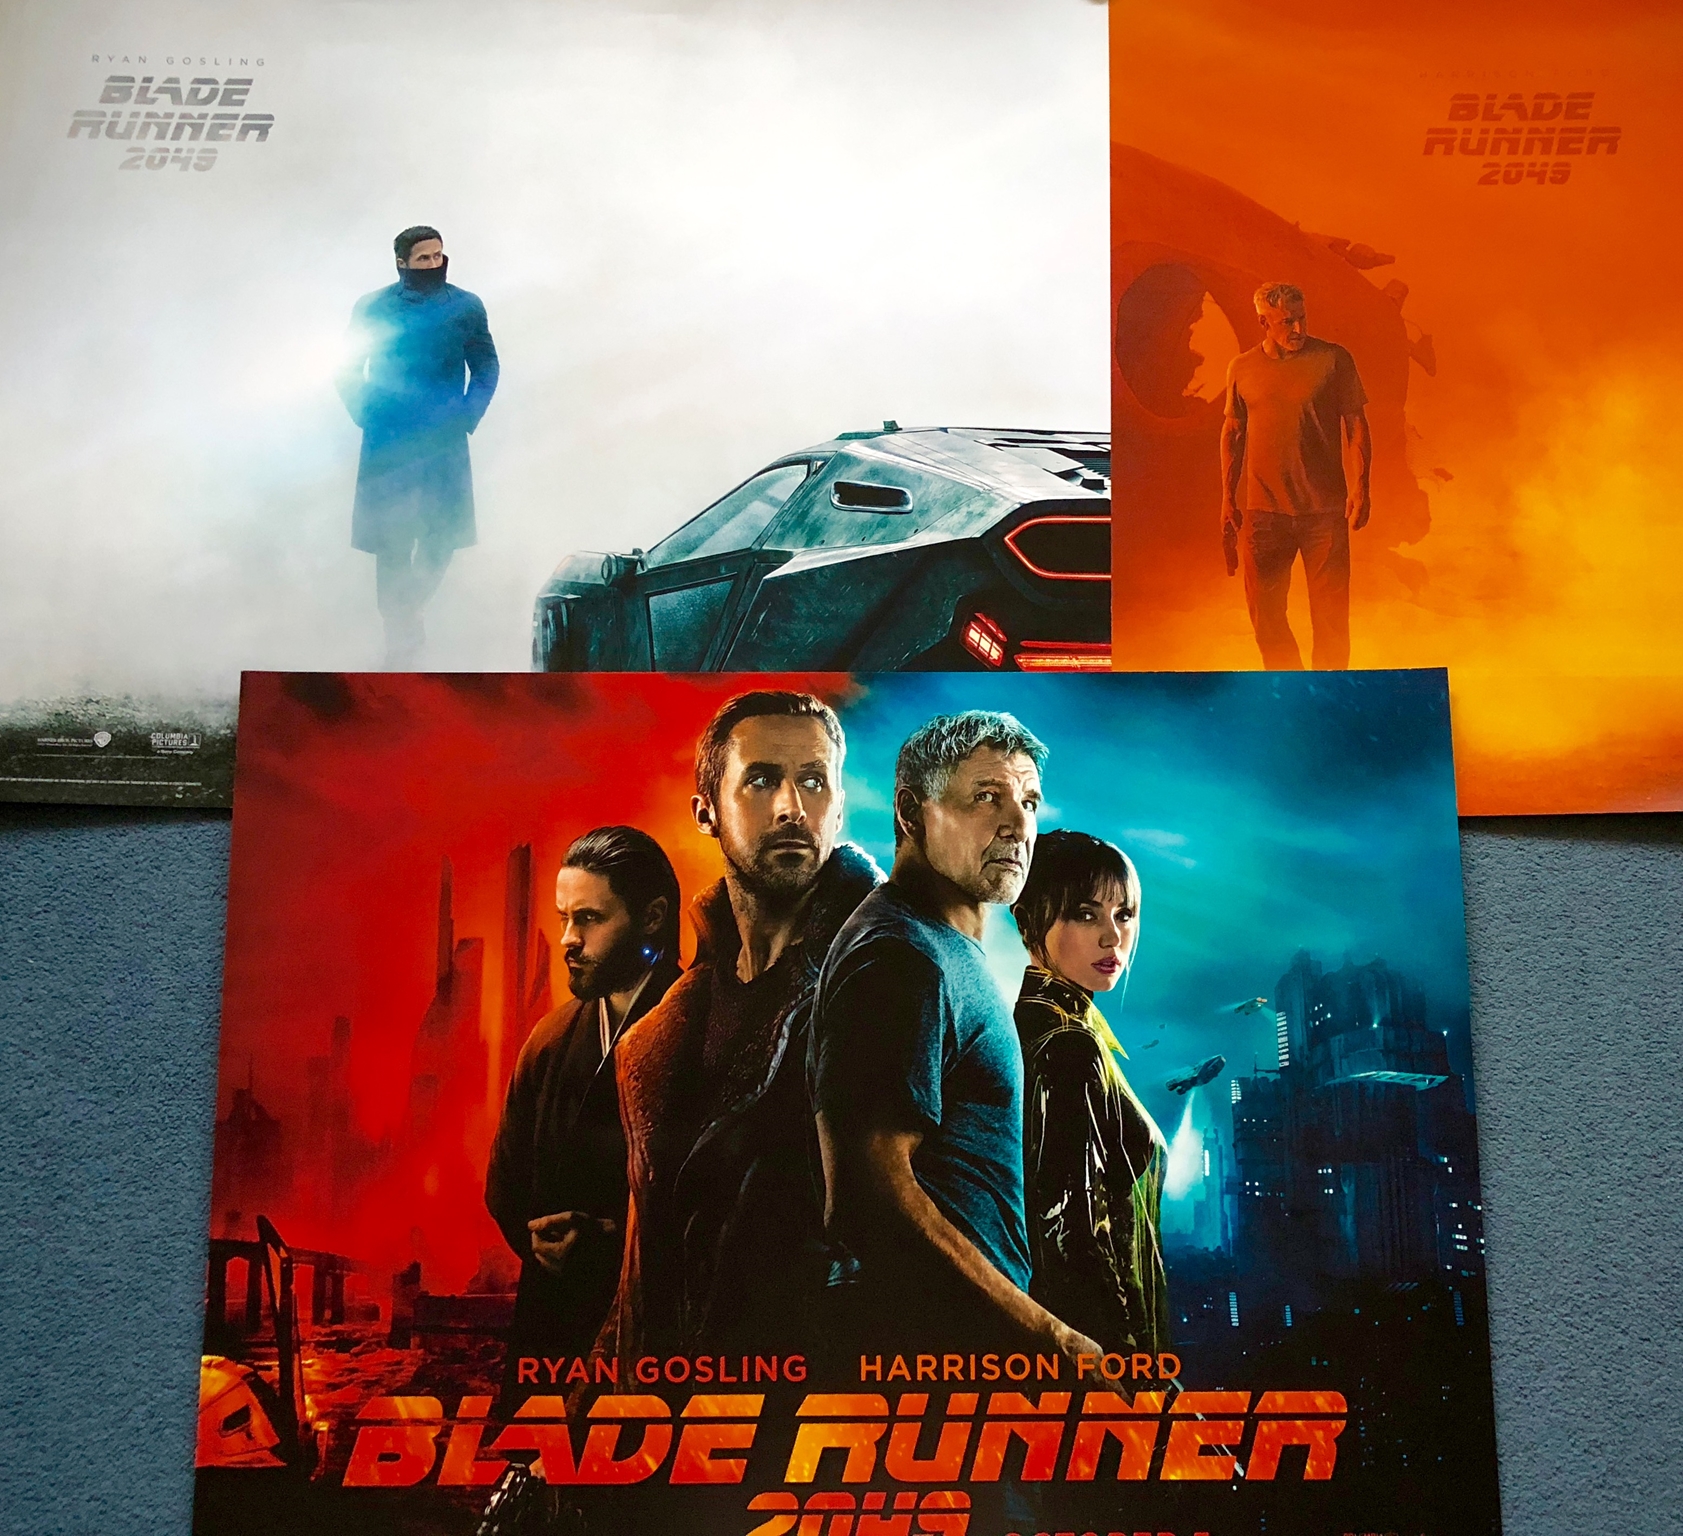 BLADE RUNNER 2049 (2017) - Lot x 3 - 3 x British UK Quad Film Posters - Advance 'Harrison Ford'